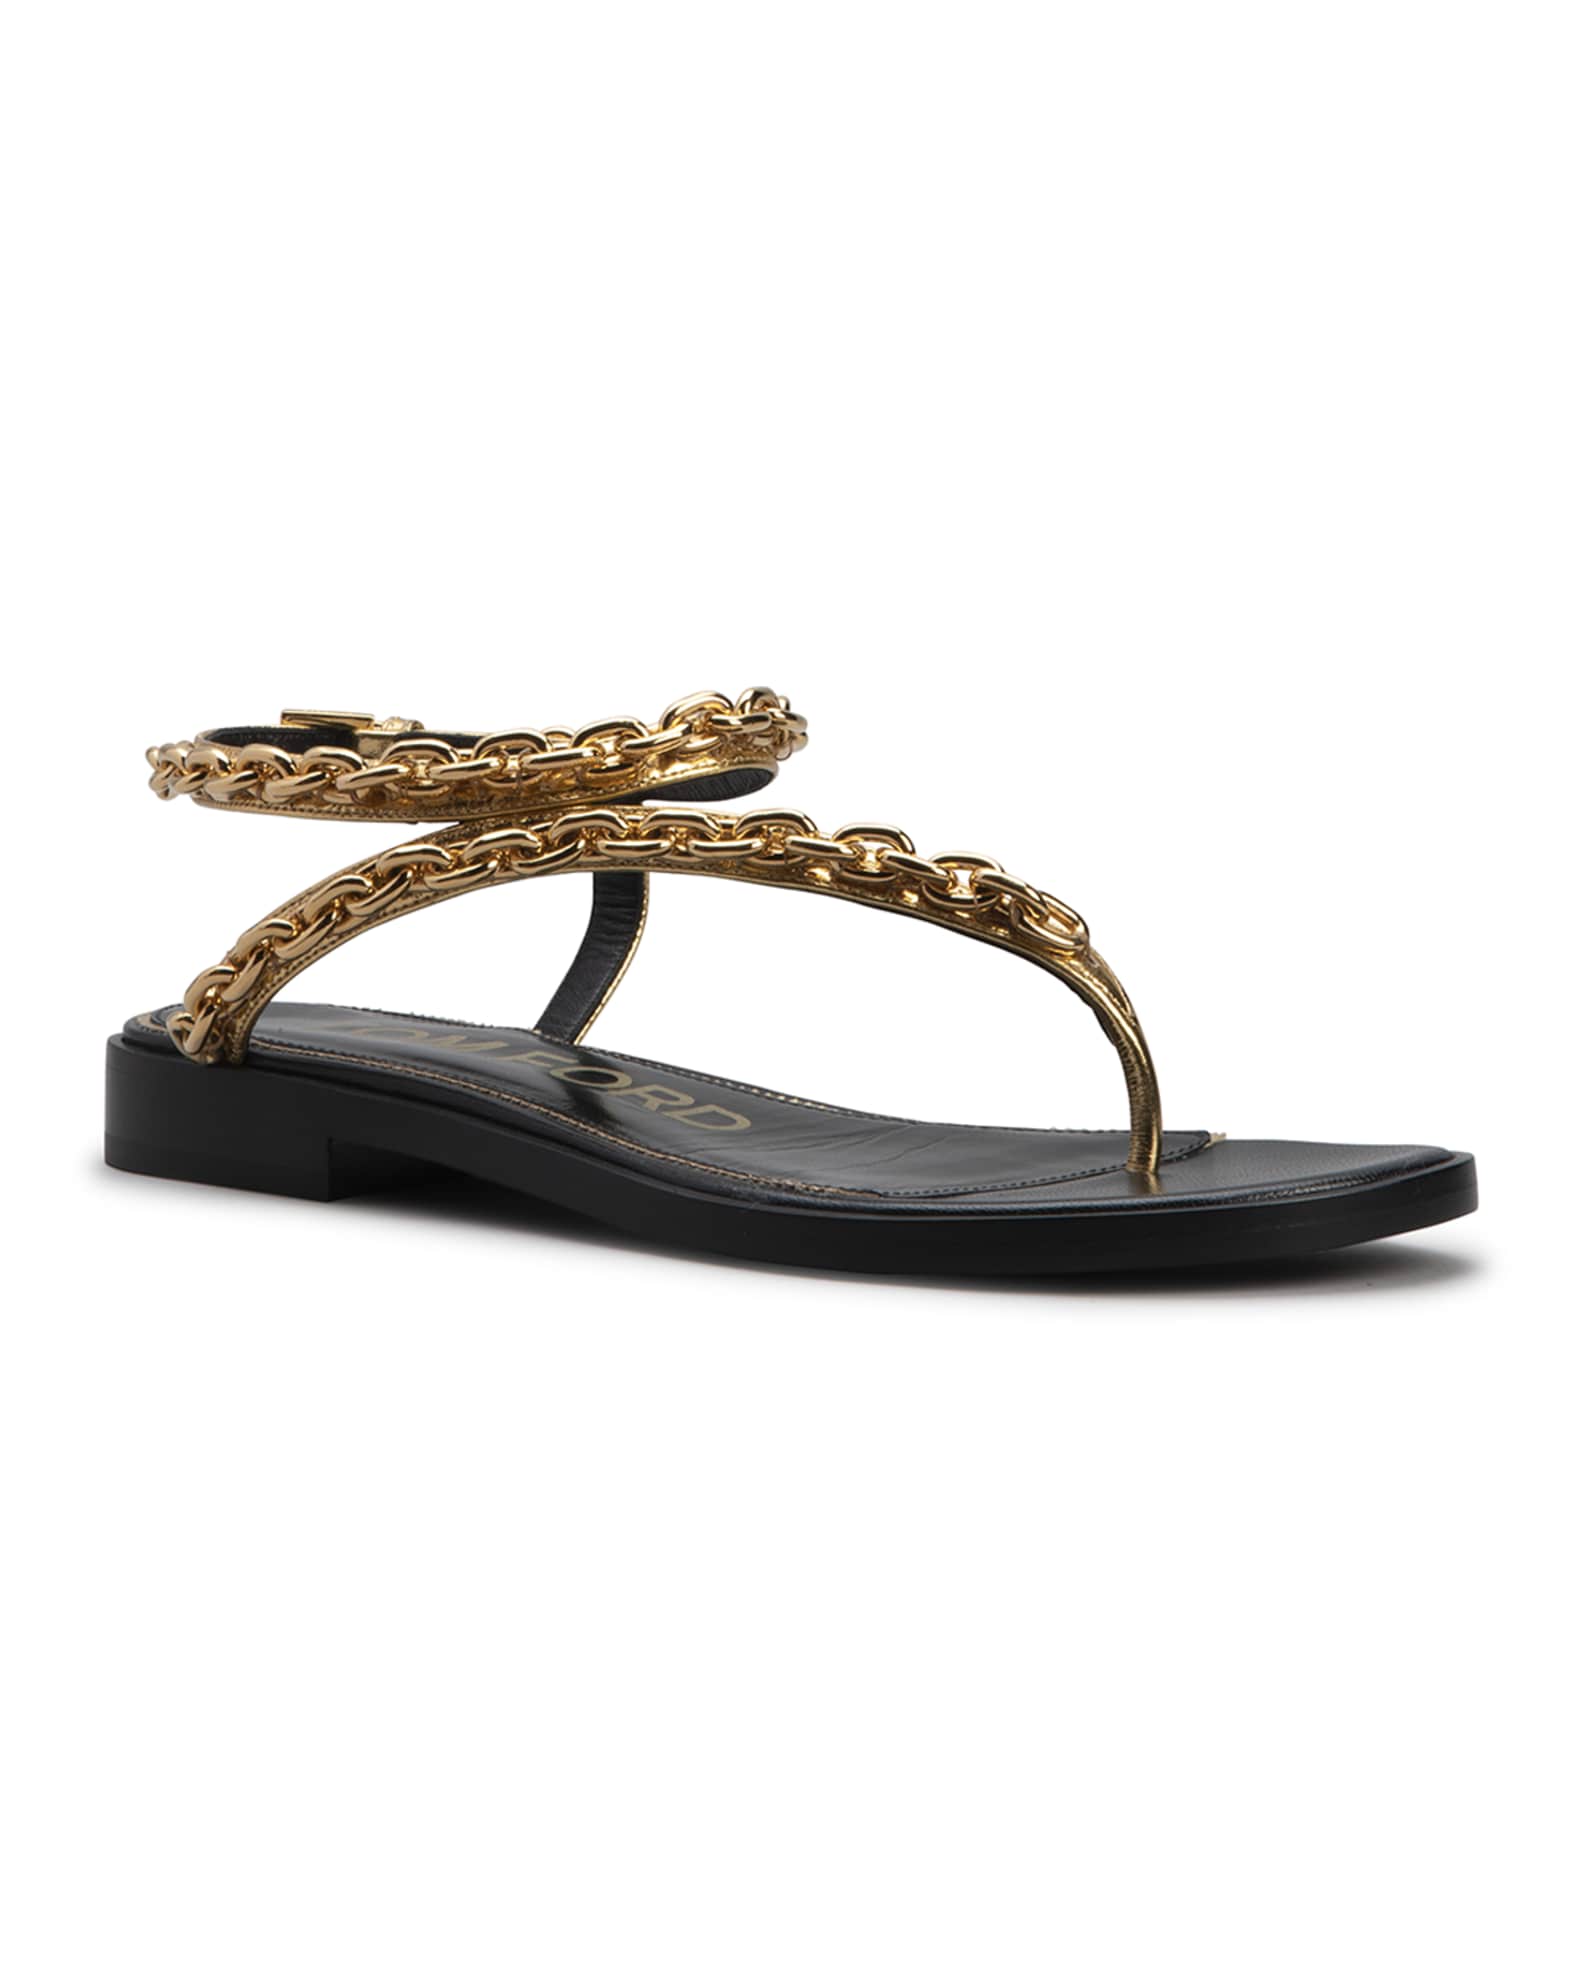 TOM FORD Metallic Chain Thong Sandals | Neiman Marcus